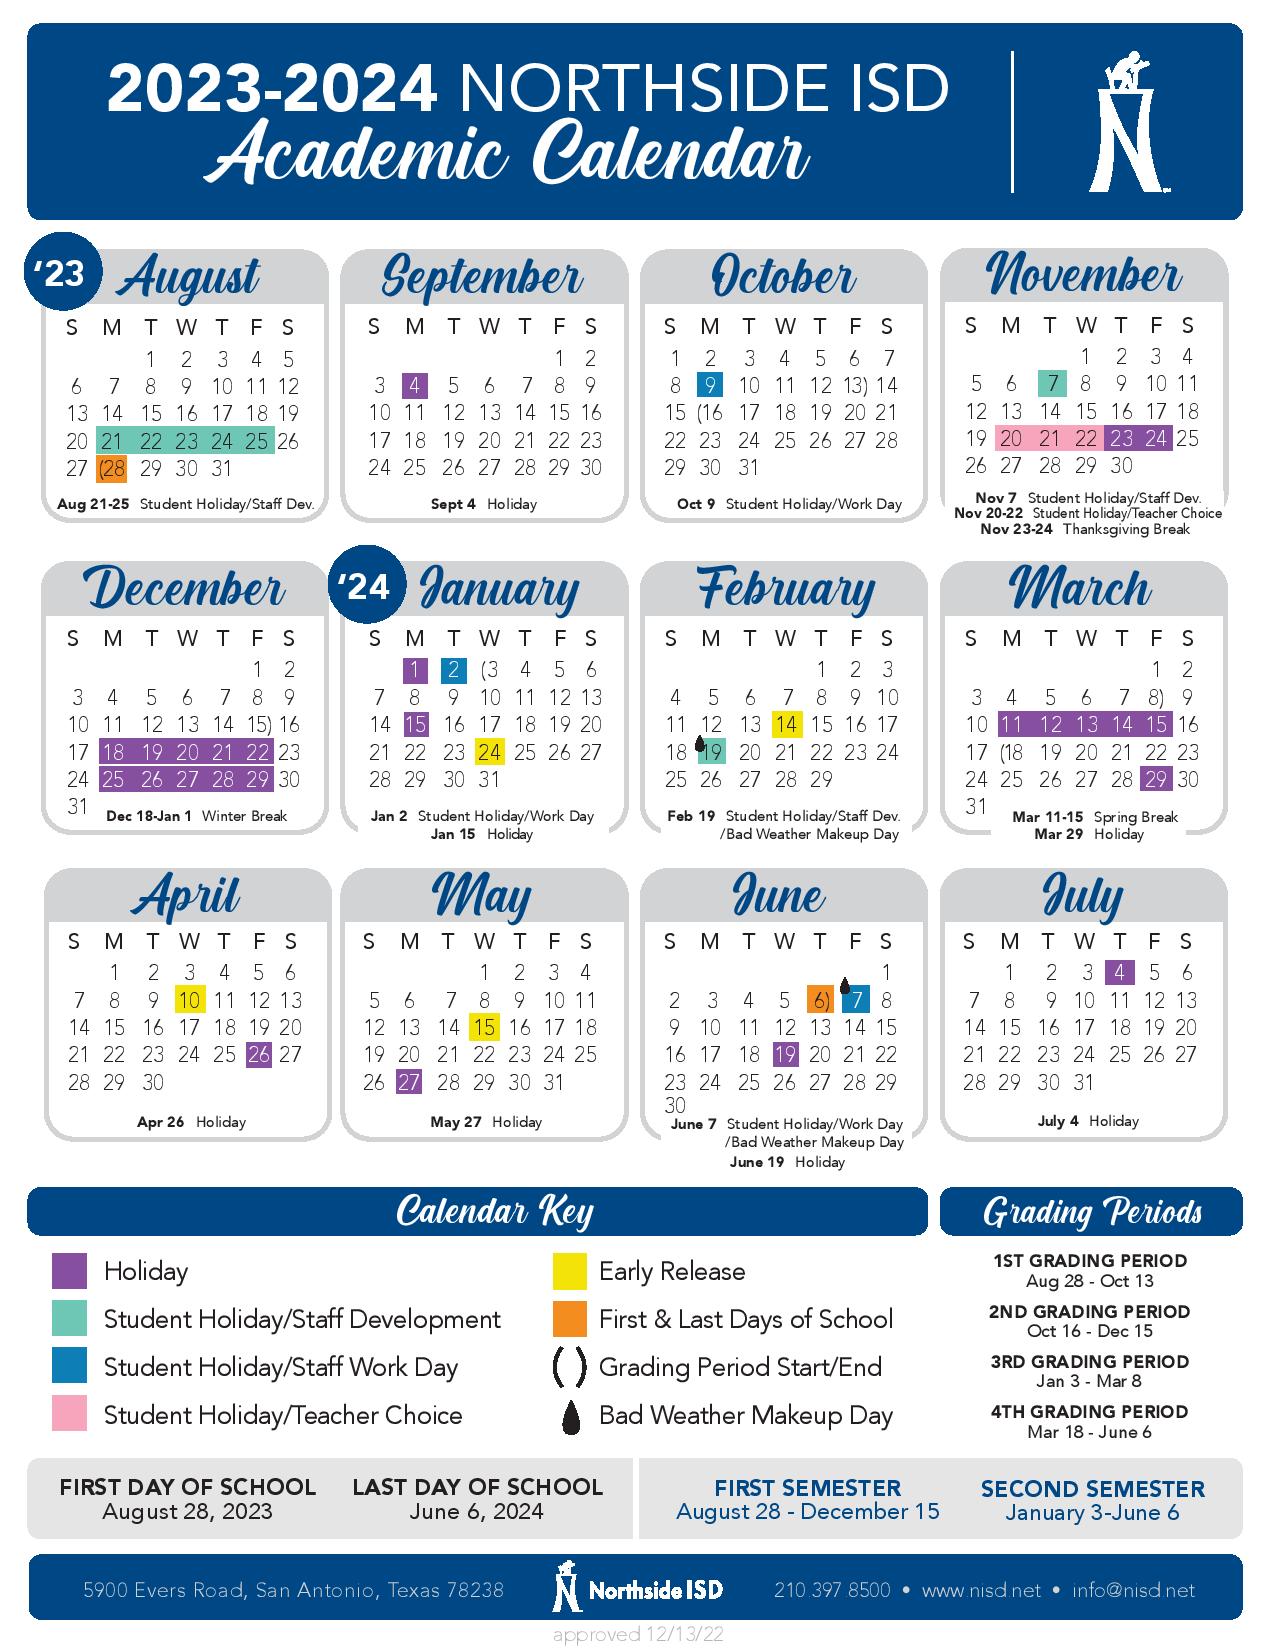 Northside Independent School District Calendar 2023 2024 PDF School Calendar Info